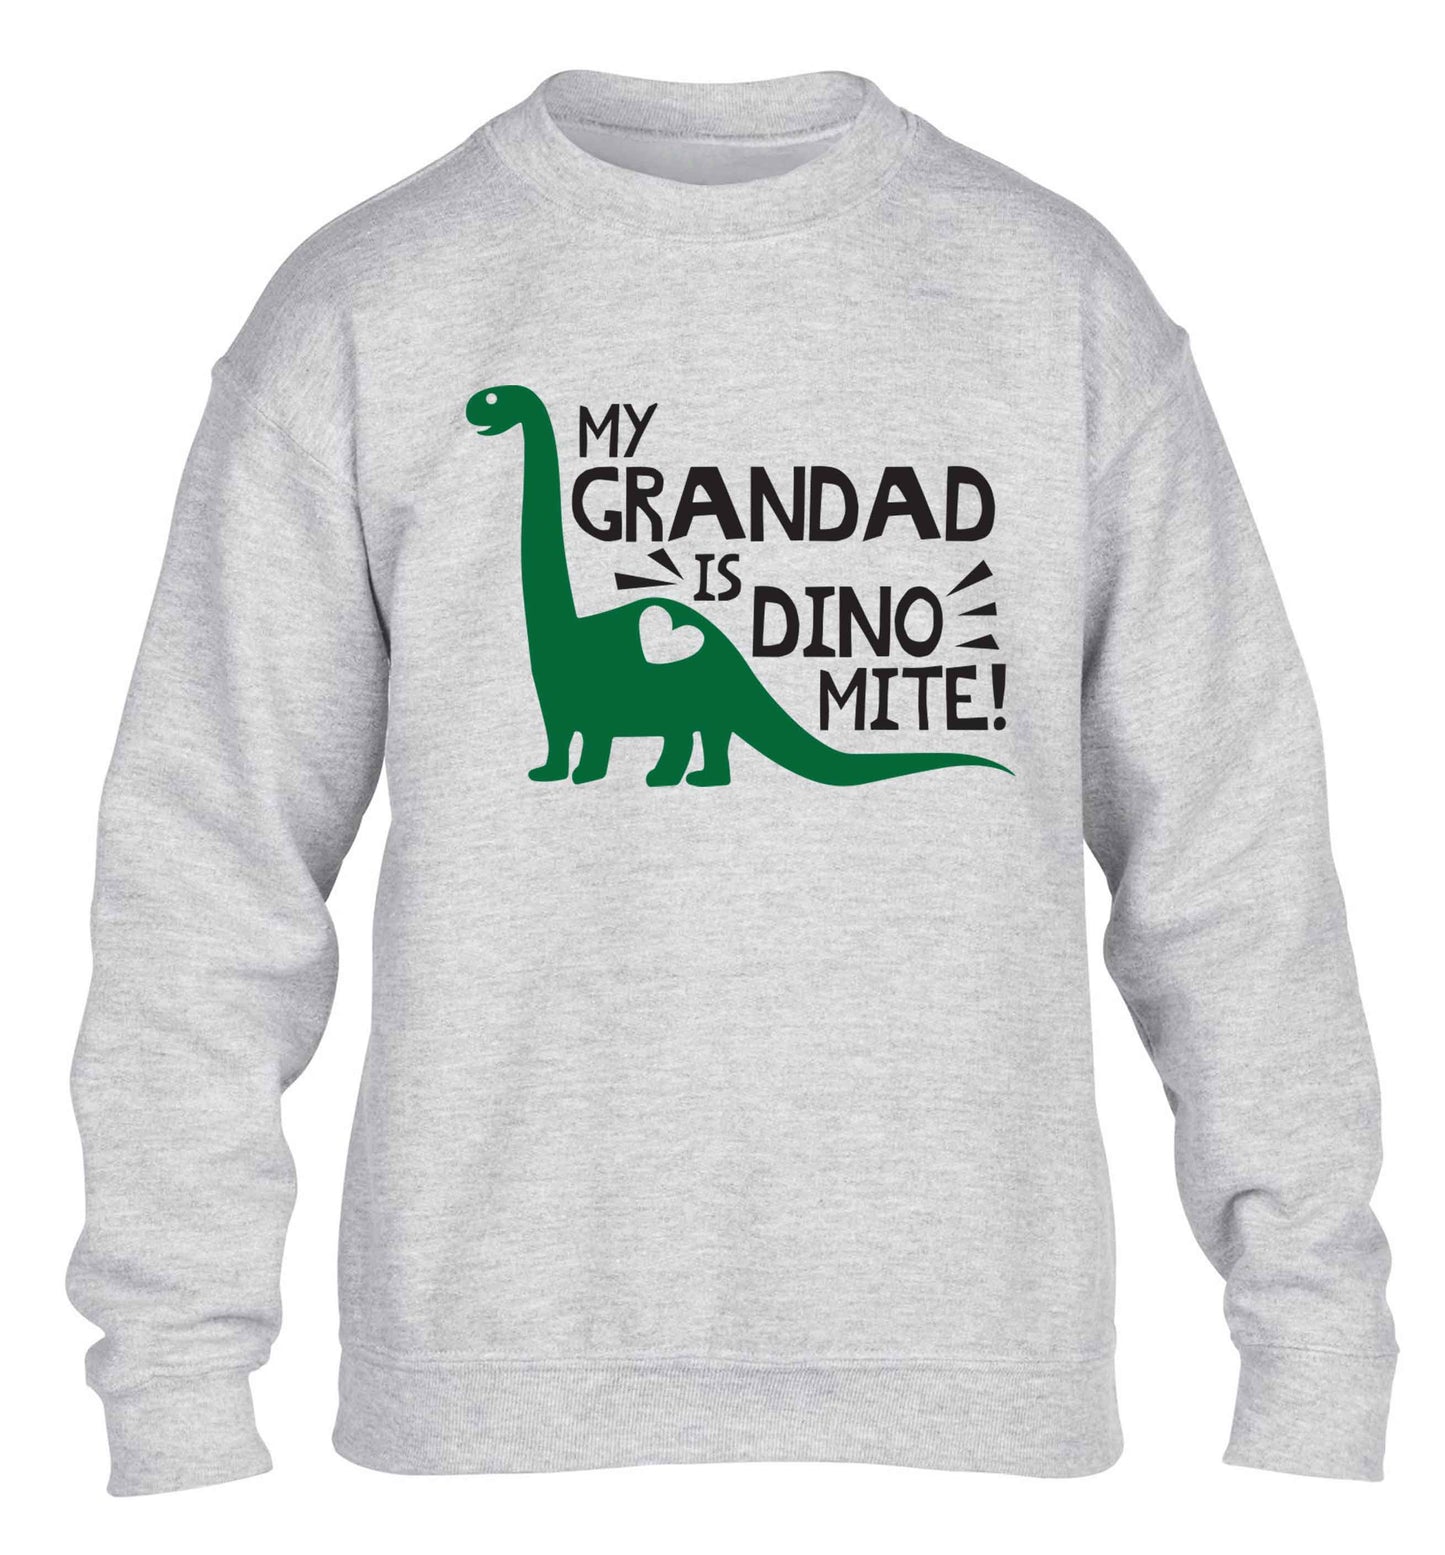 My grandad is dinomite! children's grey sweater 12-13 Years